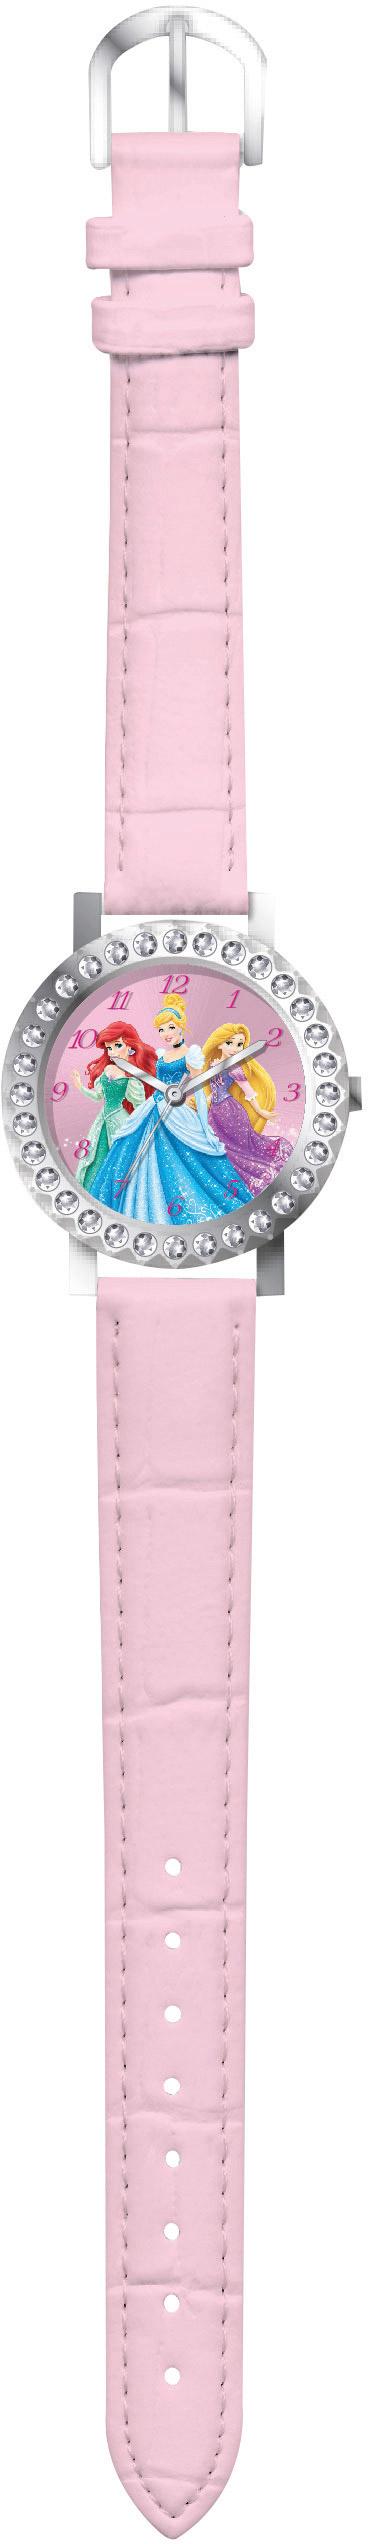 Foto Character Watches Reloj unisex Princess DP160